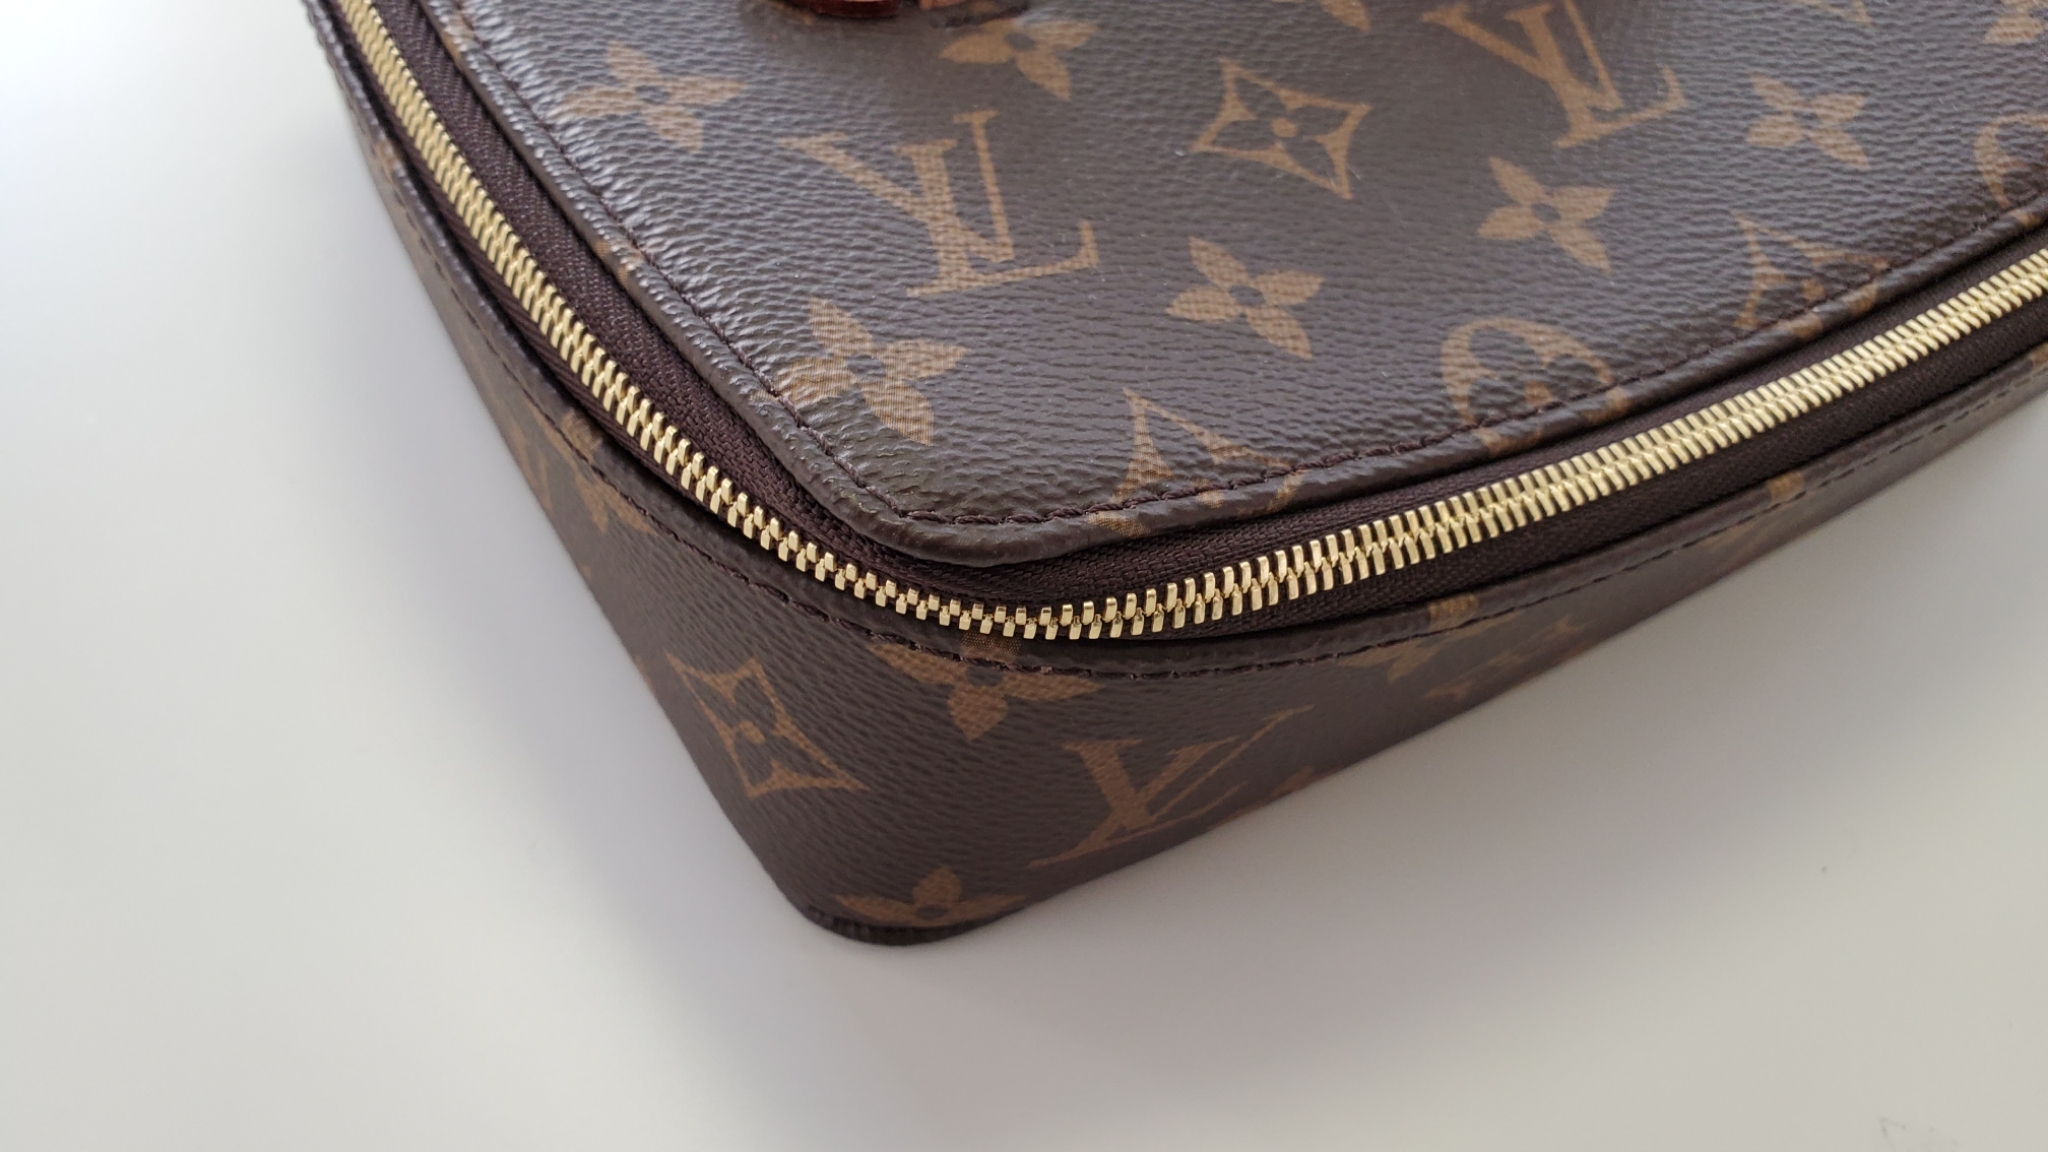 Shop Louis Vuitton Nice jewelry case (M43449) by design◇base